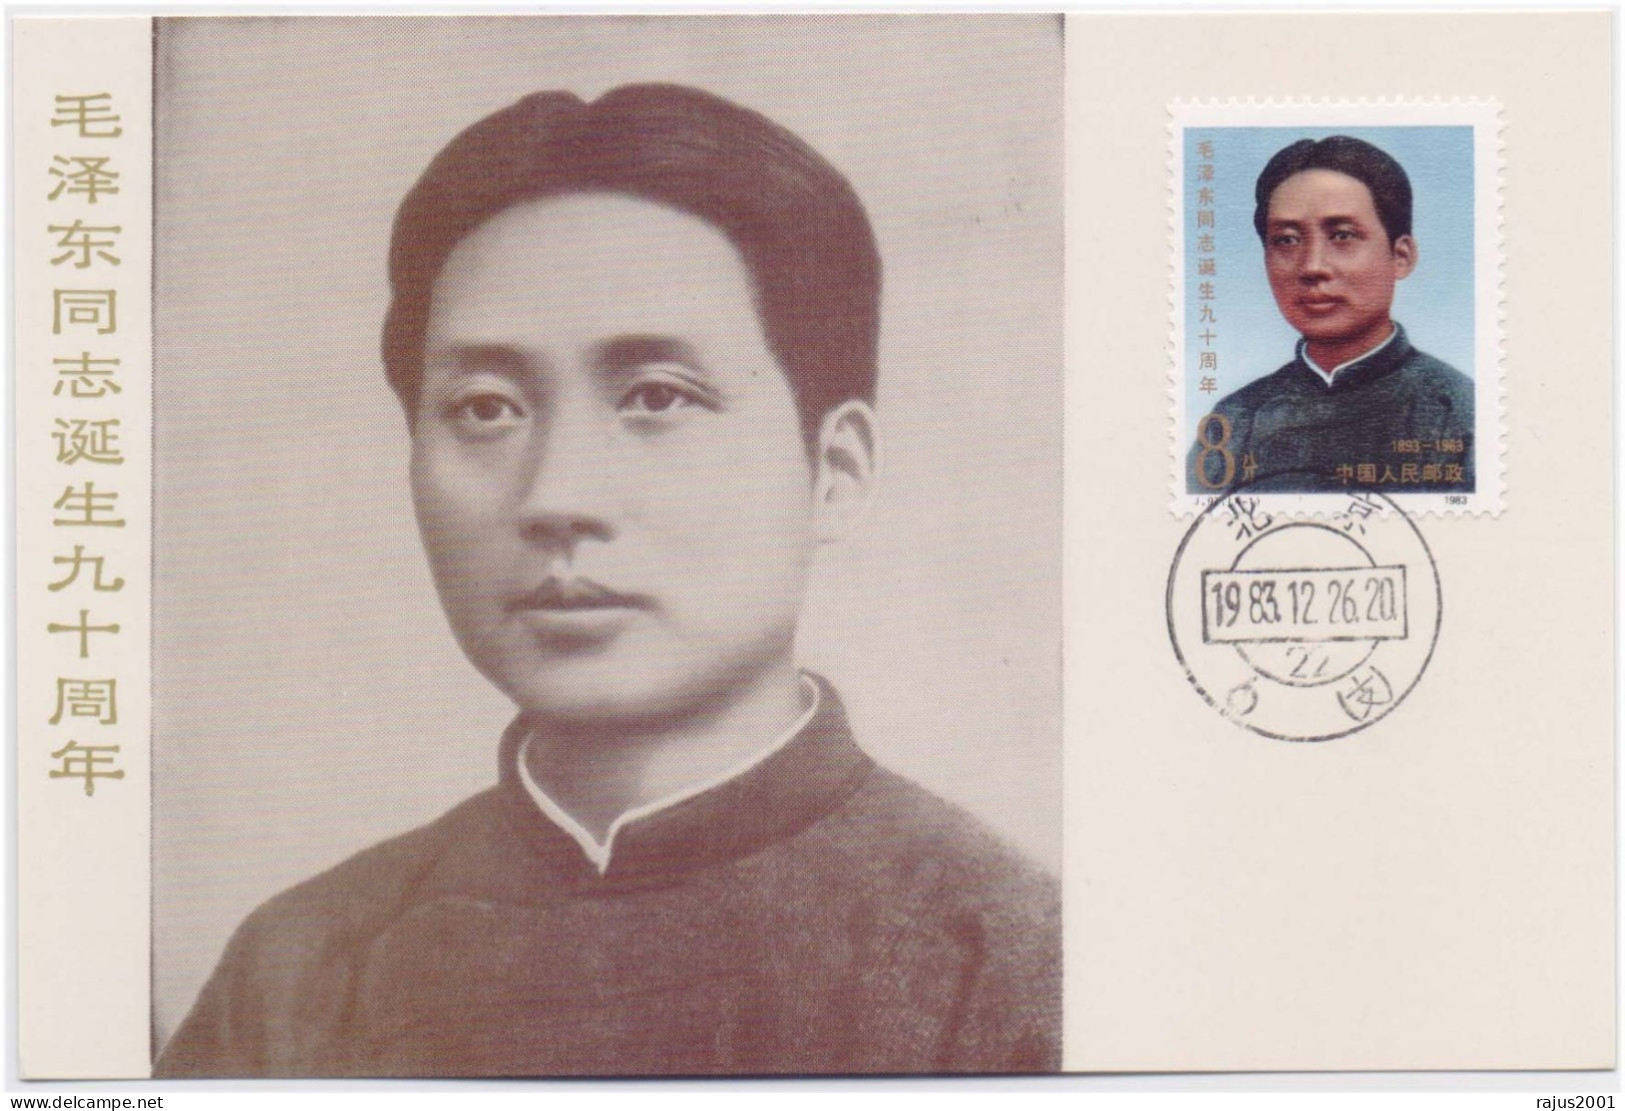 Mao Zedong, Mao Tse-Tung Leads China's Revolution, Chinese Revolutionary Communist Leader, History Famous Men, Max Card - Mao Tse-Tung